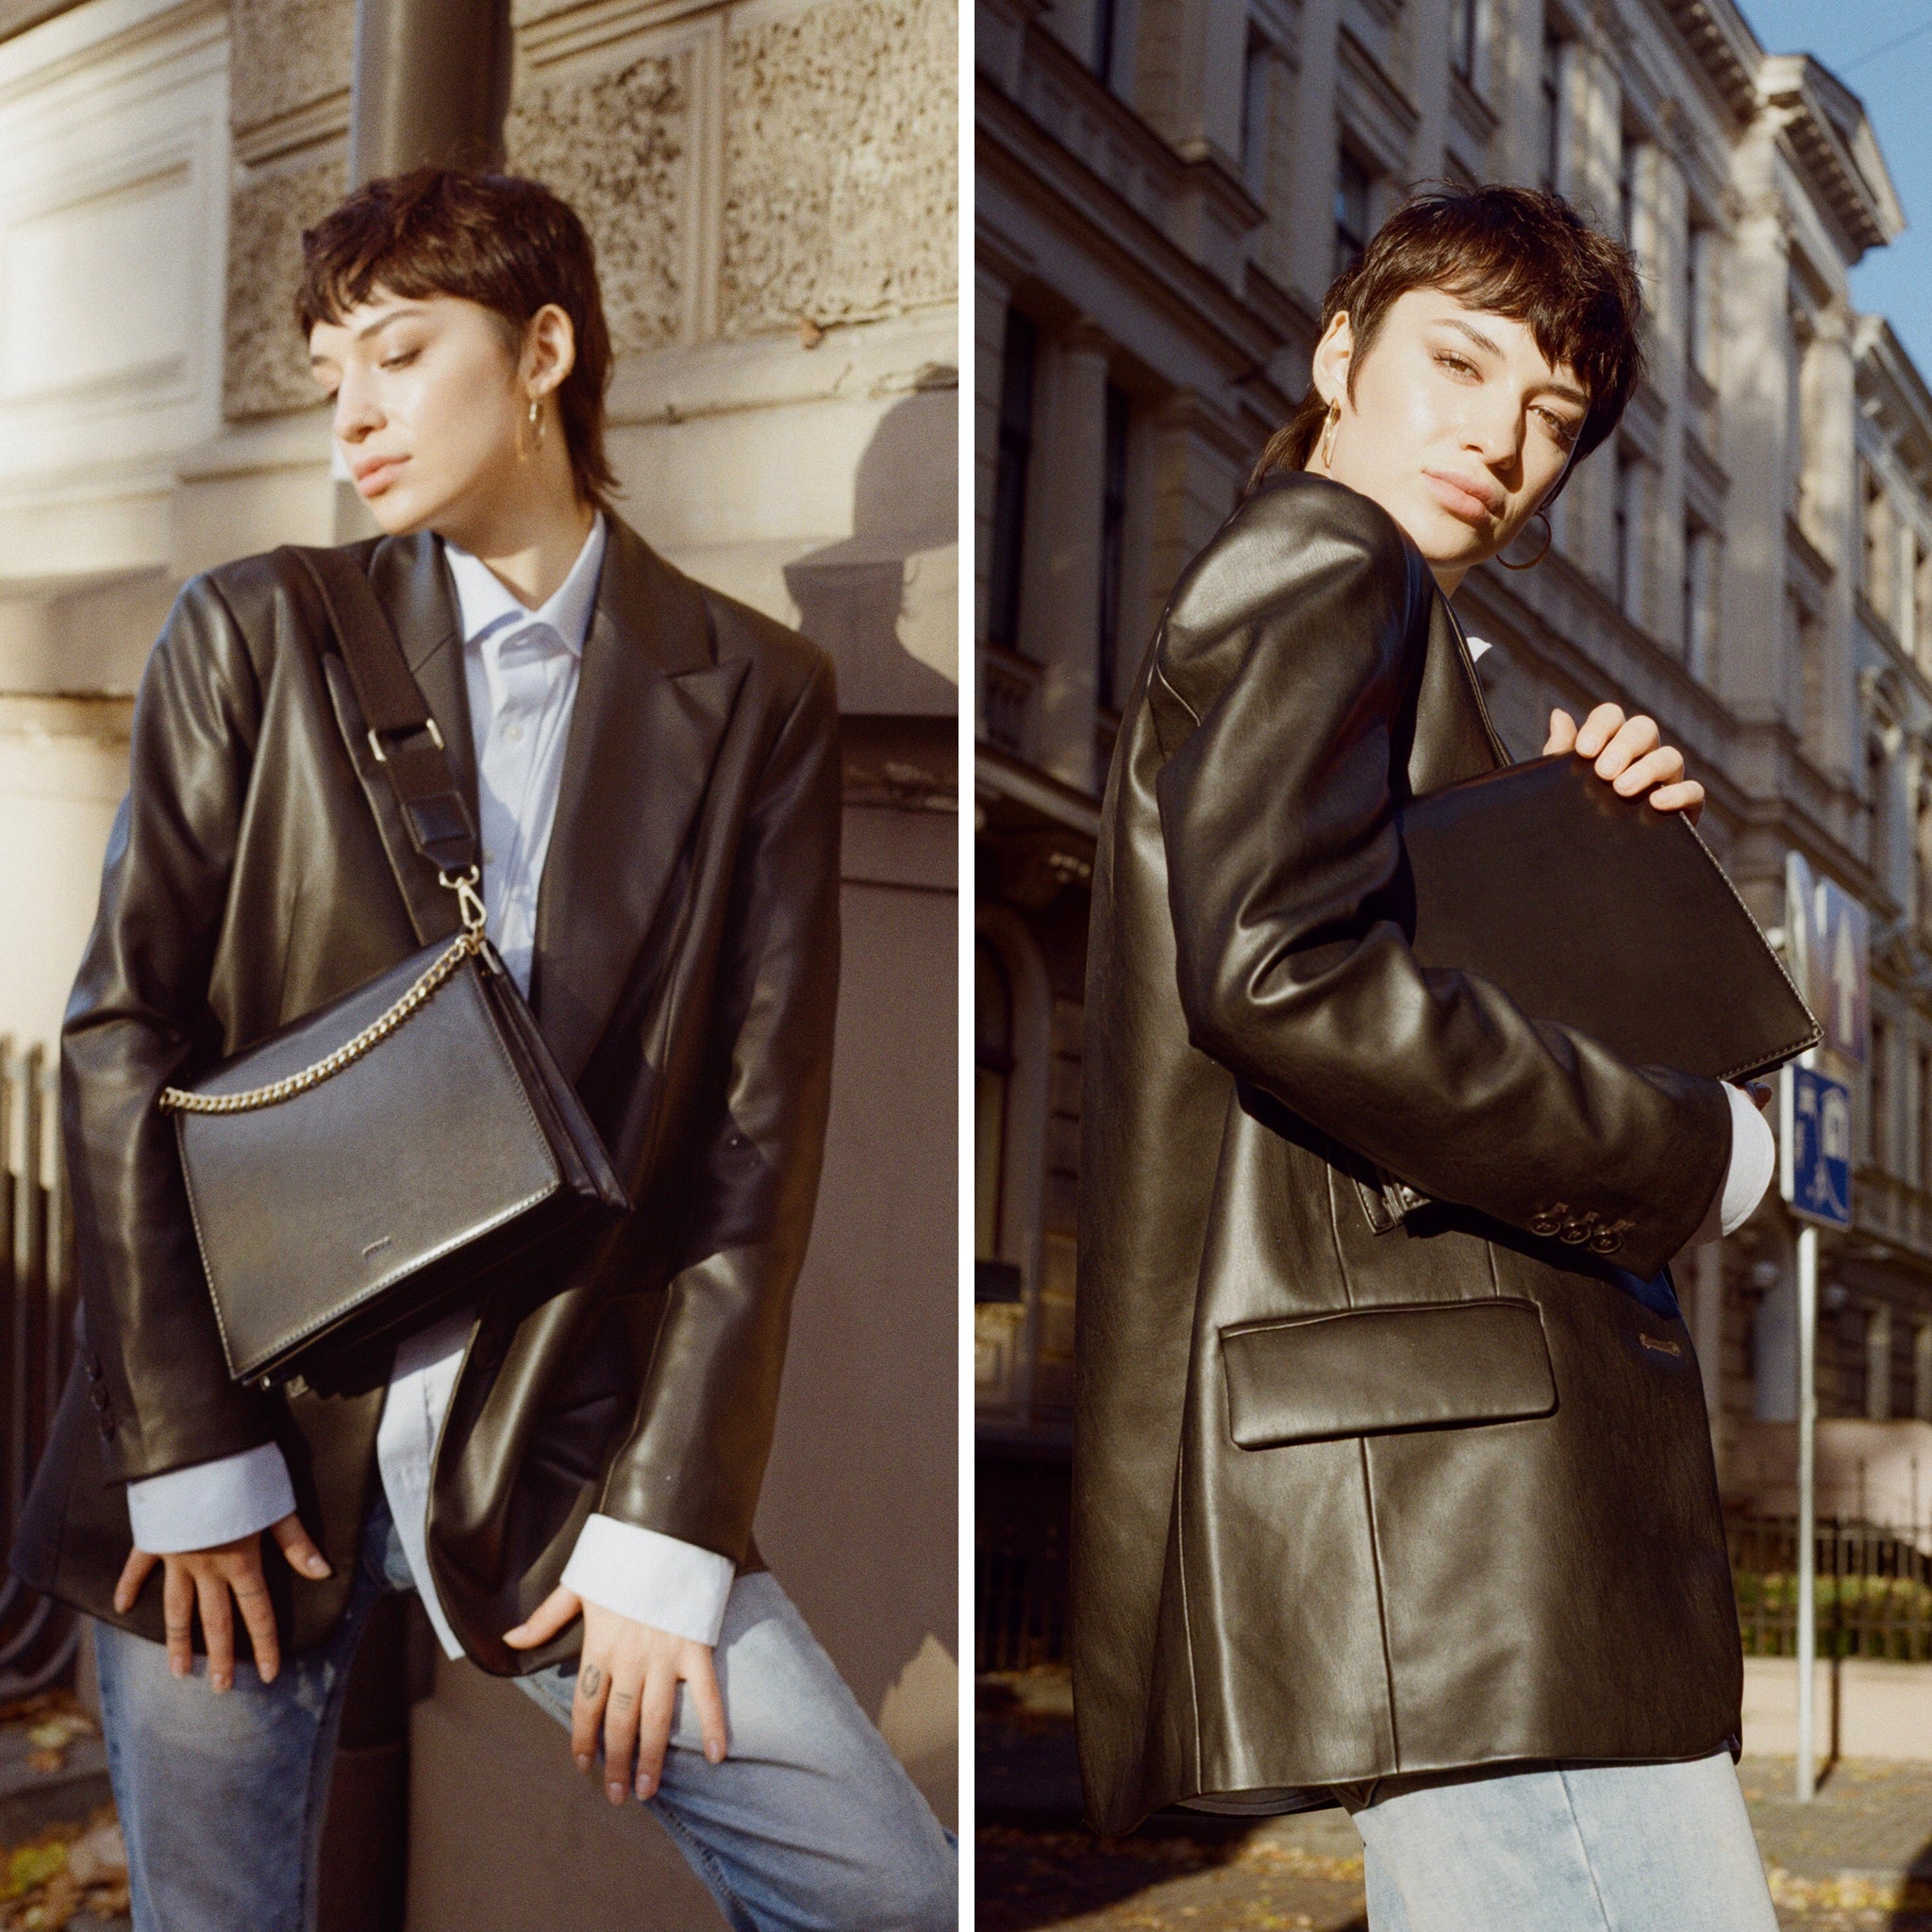 Jeele Black Bag - Women's Handbags - Shoulder Bag